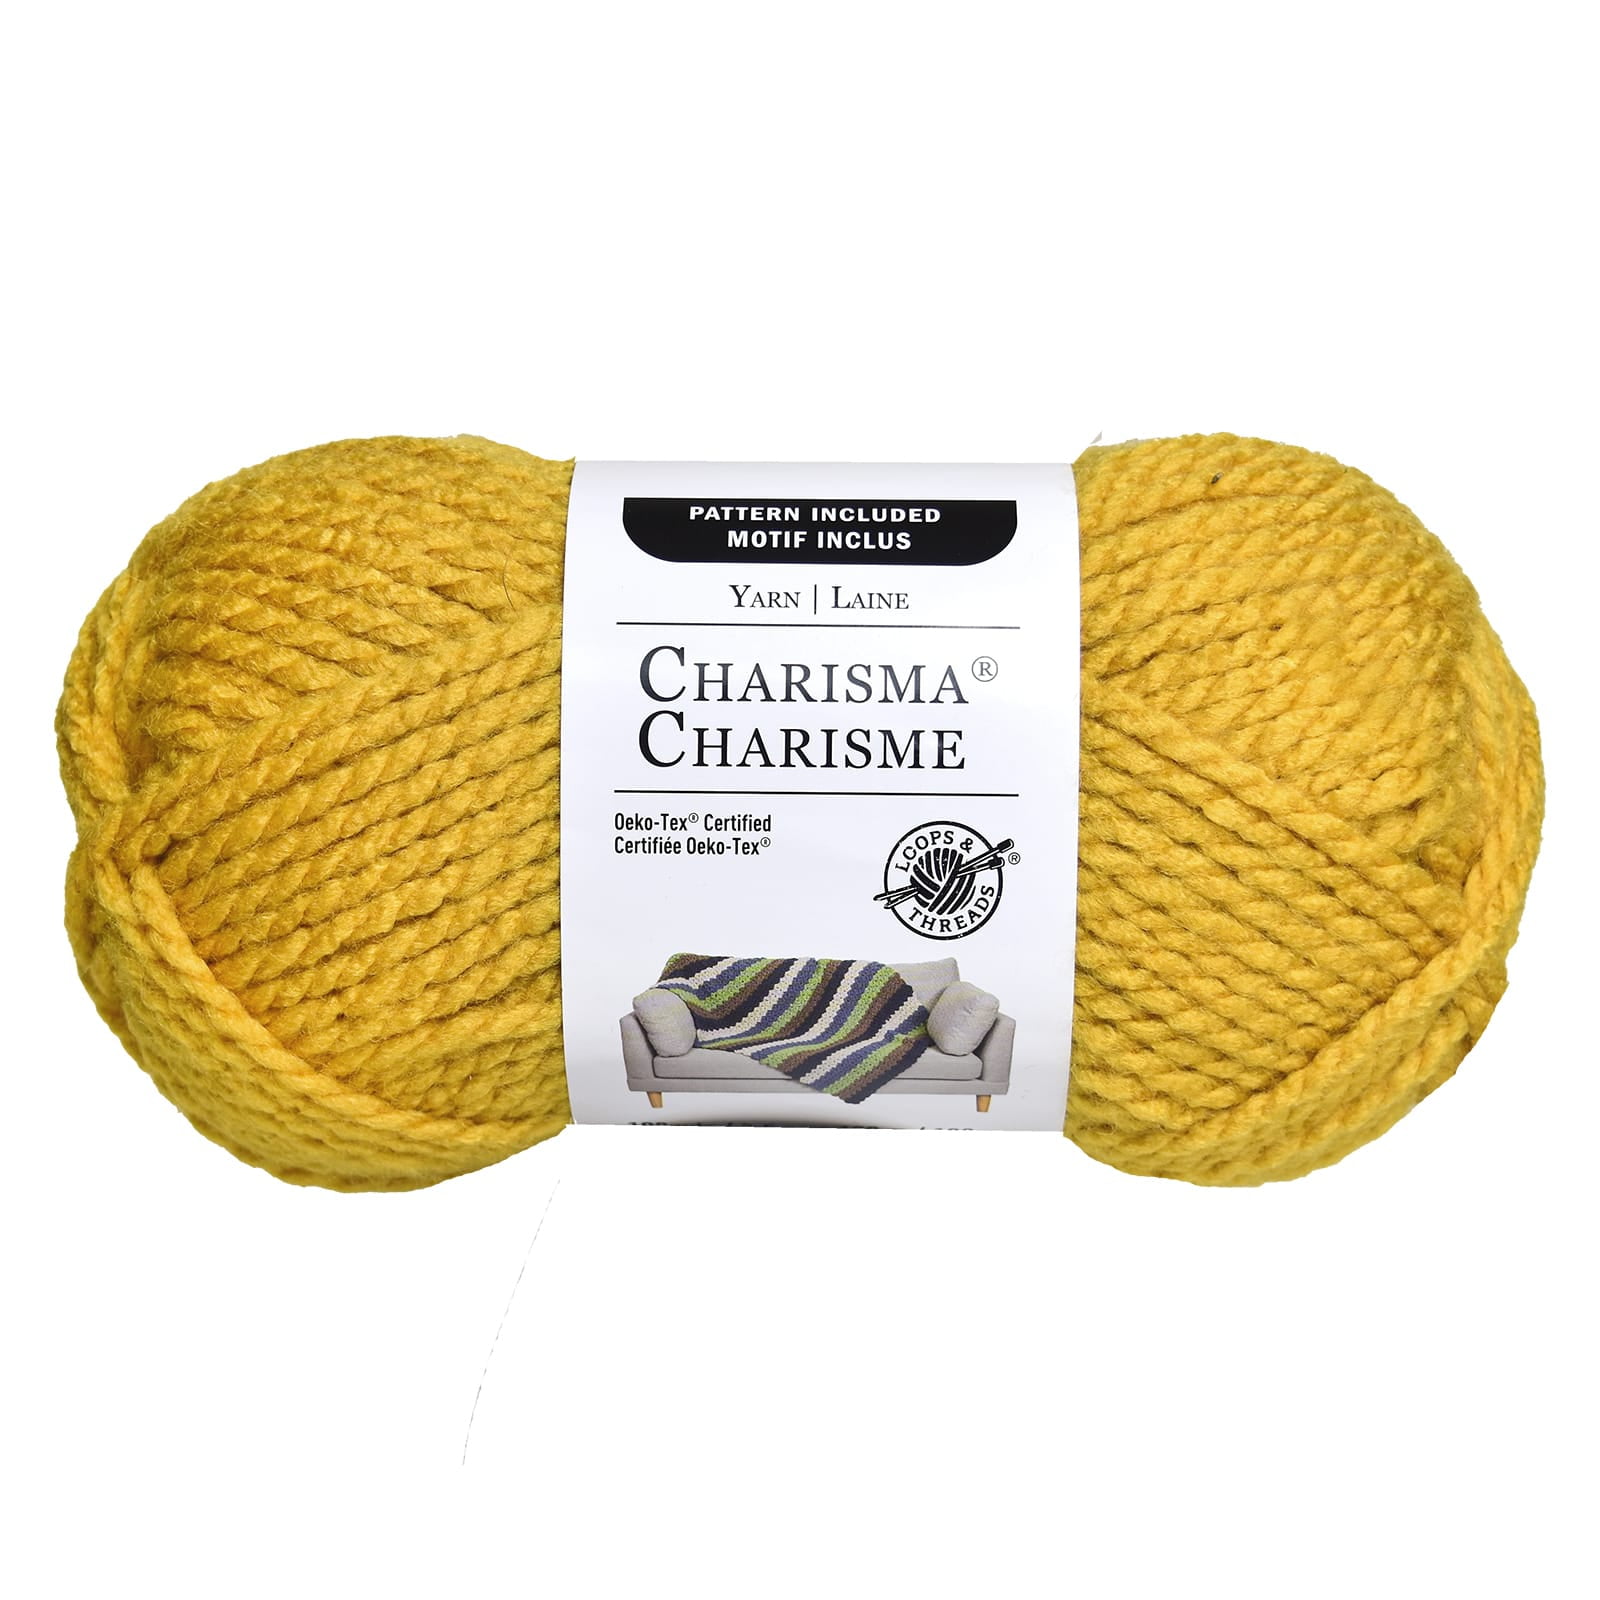 Charisma Yarn, 3.5 oz in Northern Light by Loops & Threads